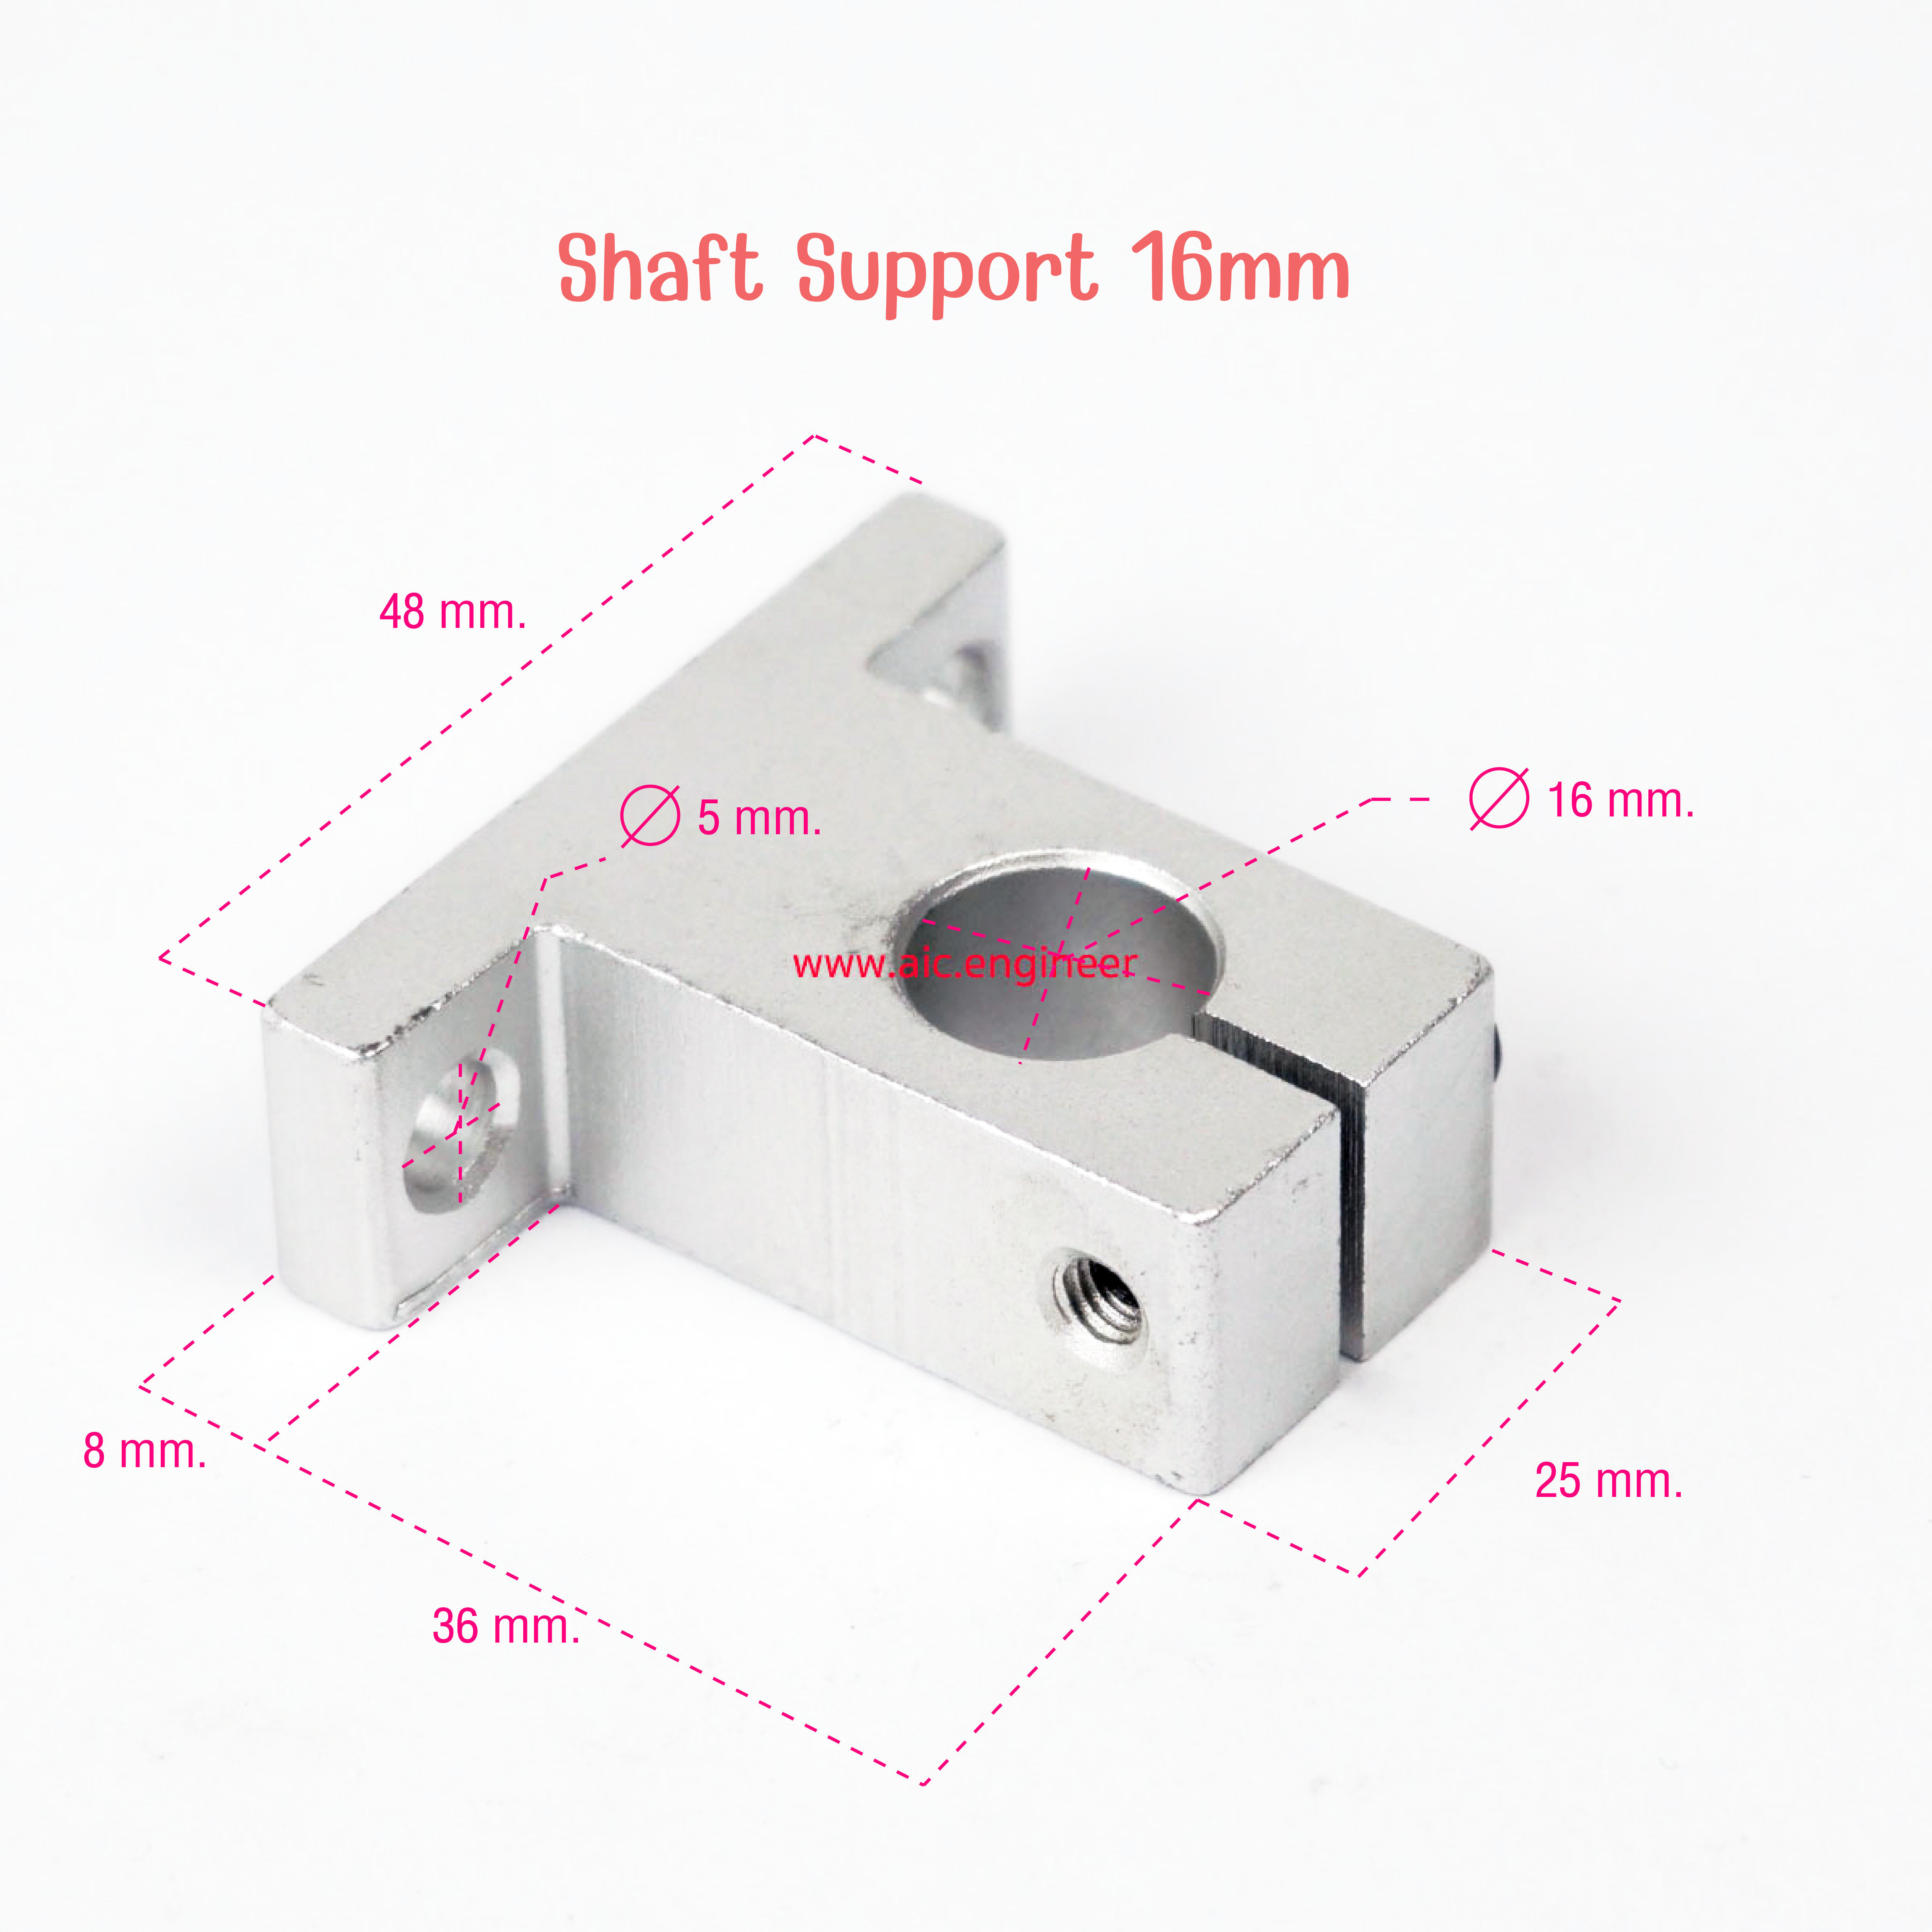 Shaft Support 16mm